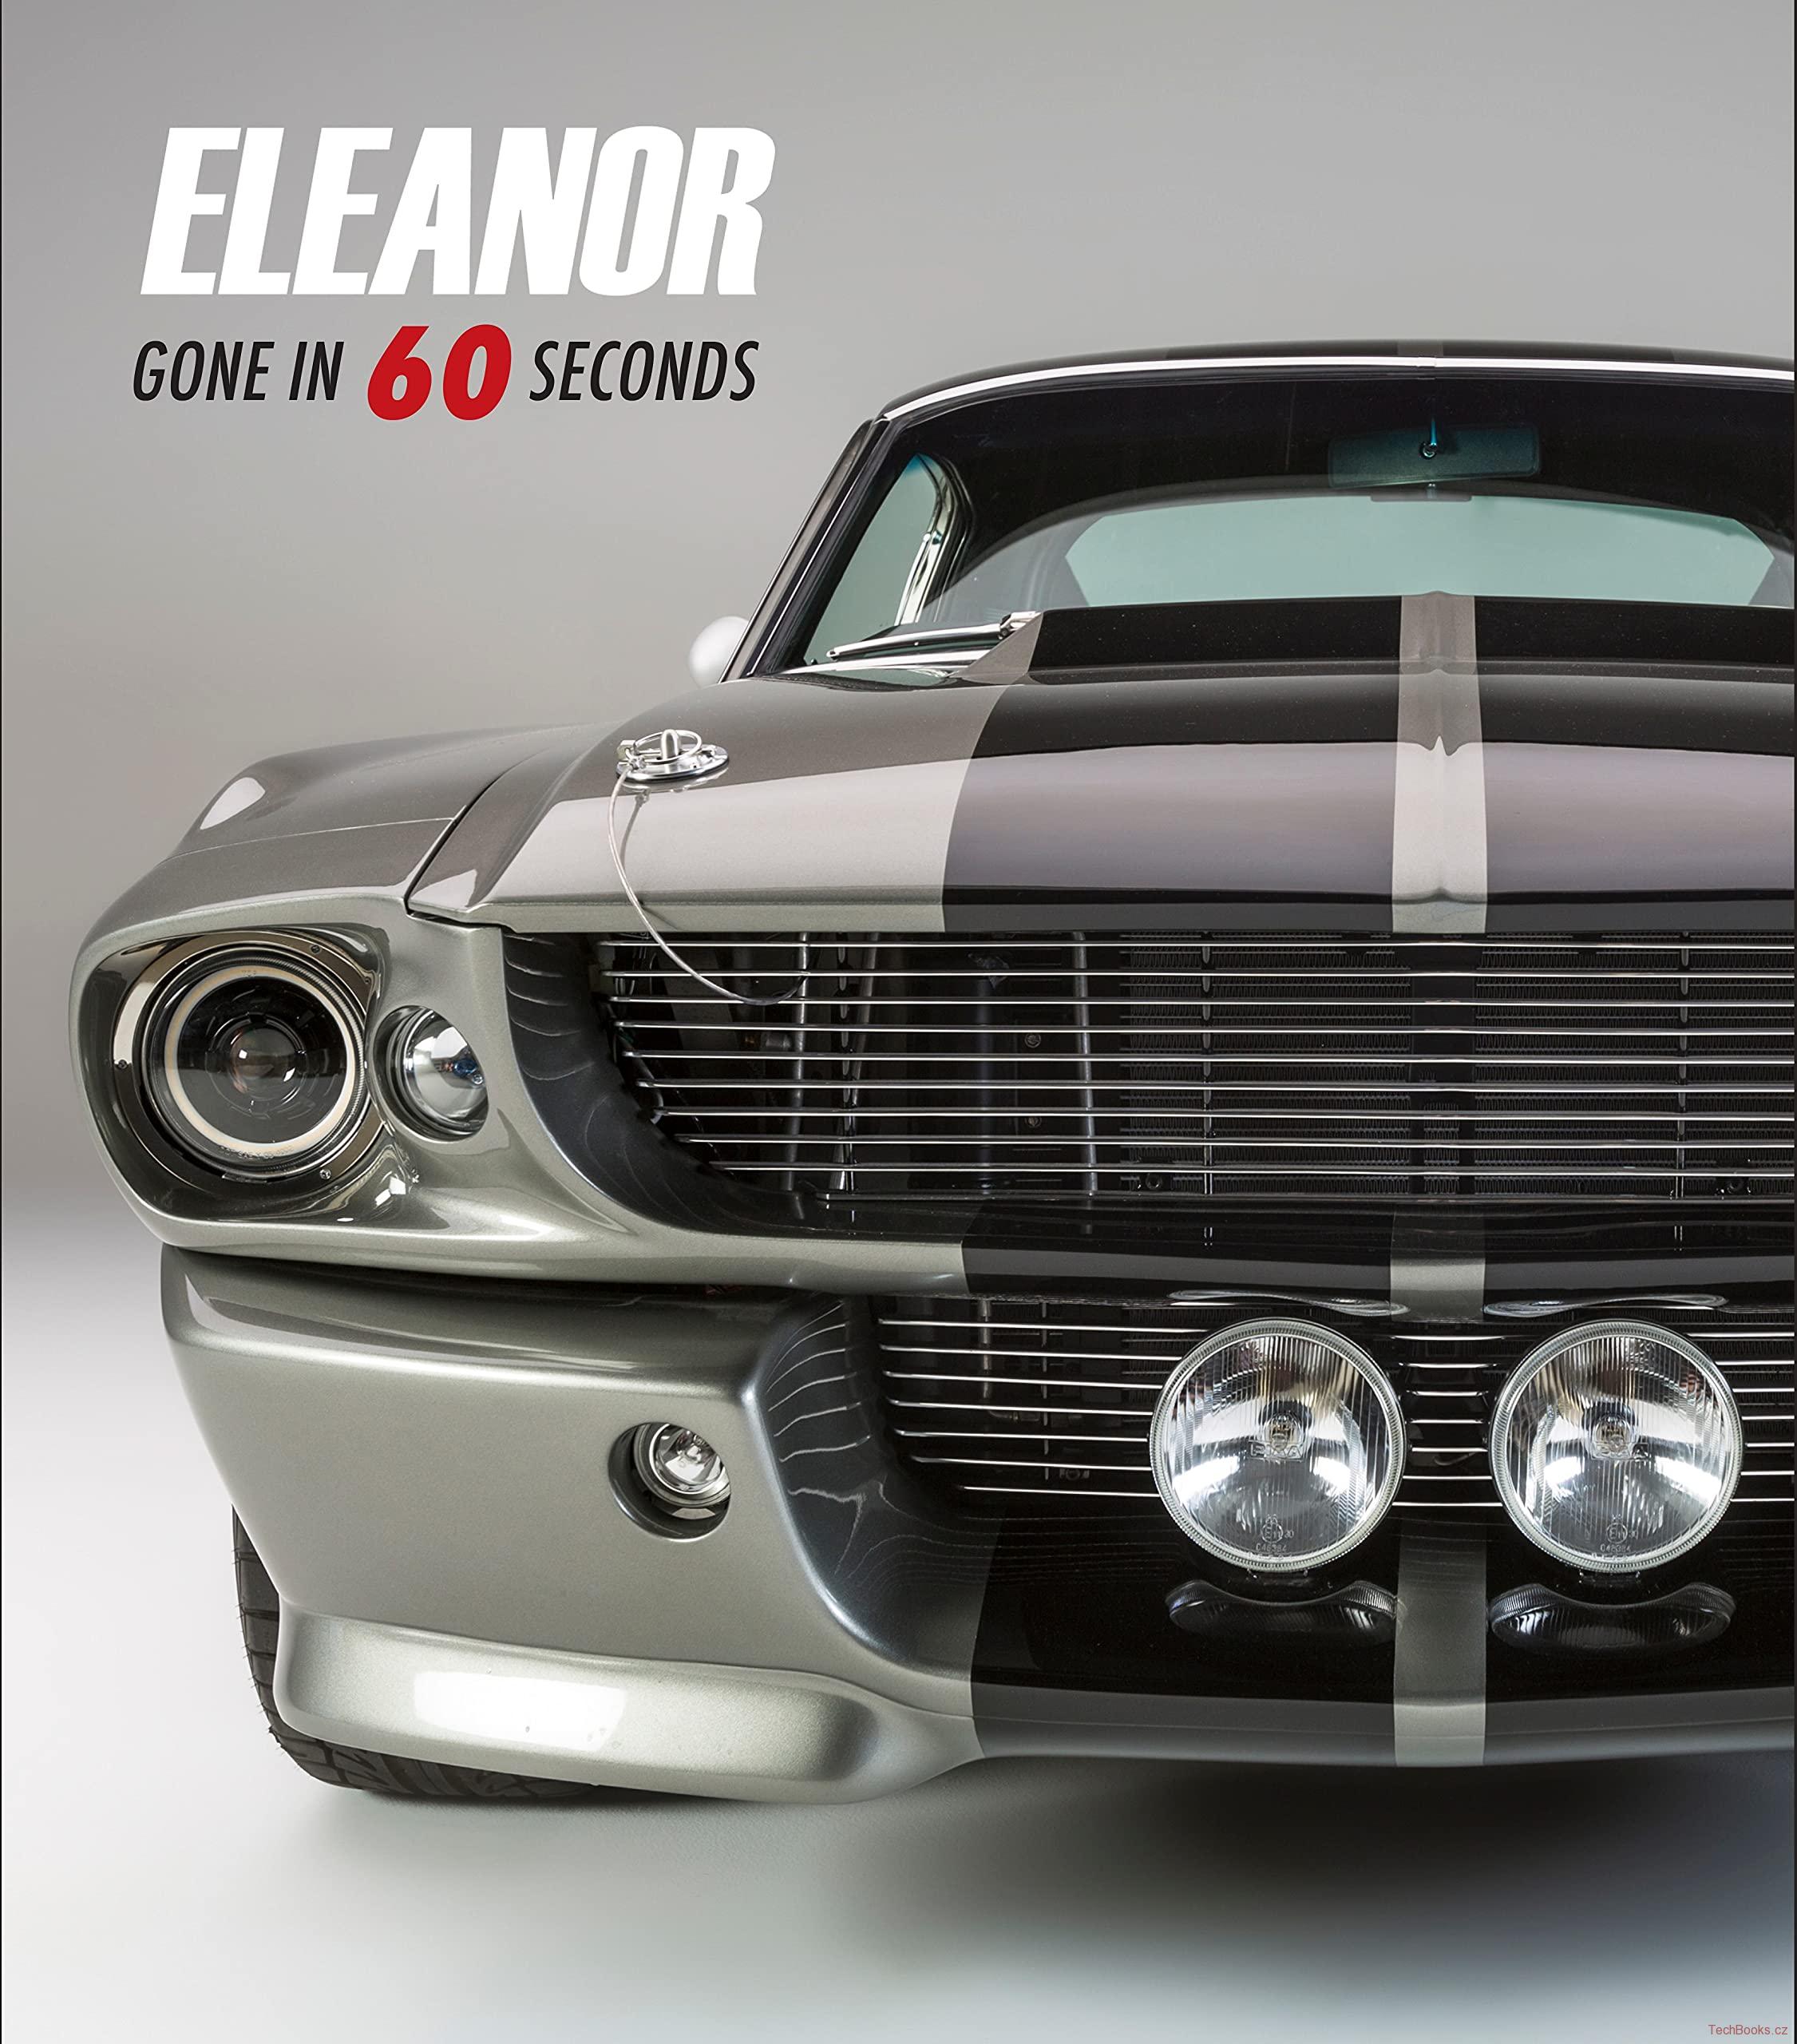 Eleanor - Gone In 60 Seconds